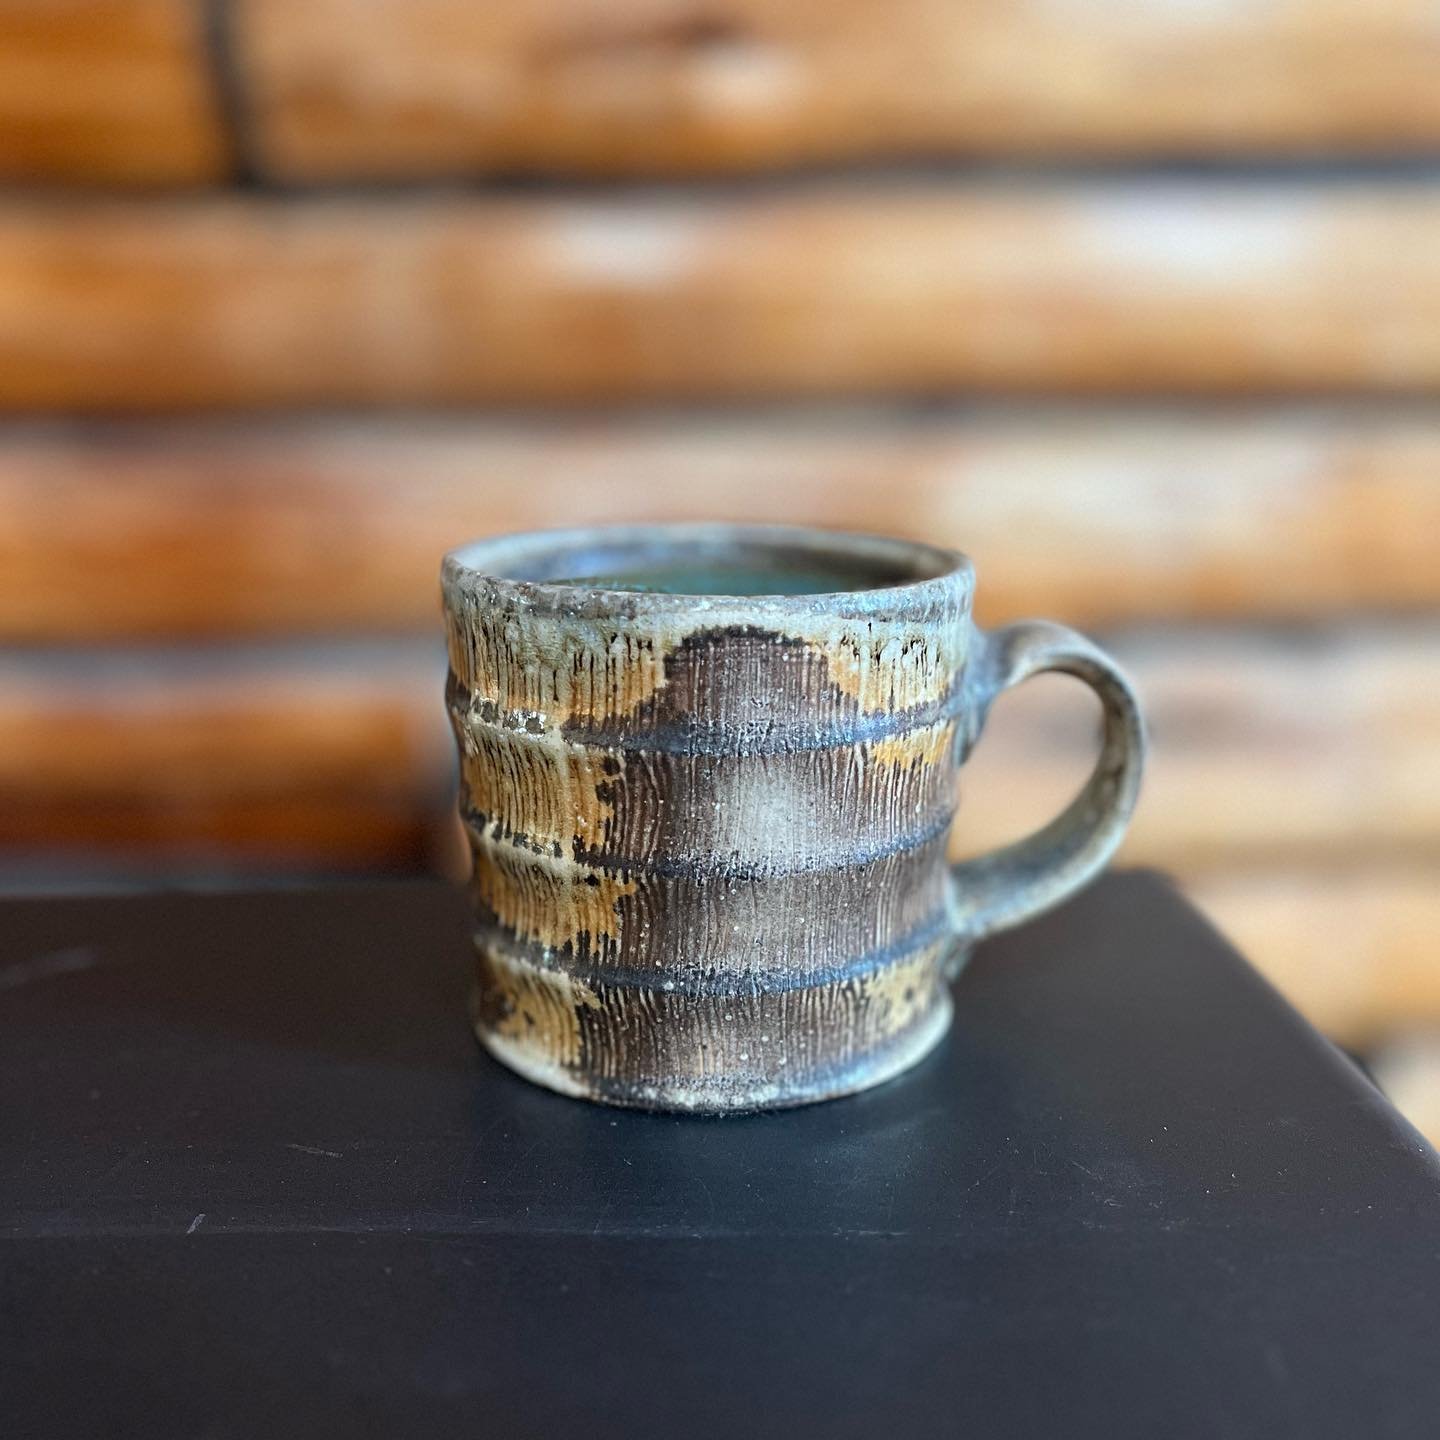 Test drive!

#pottery #ceramics #tableware #porcelain #woodfiredceramics #woodfiredpottery #woodfiredporcelain #contemporaryceramics #madeinmontana #potspotspots #potteryismyfavoritesport